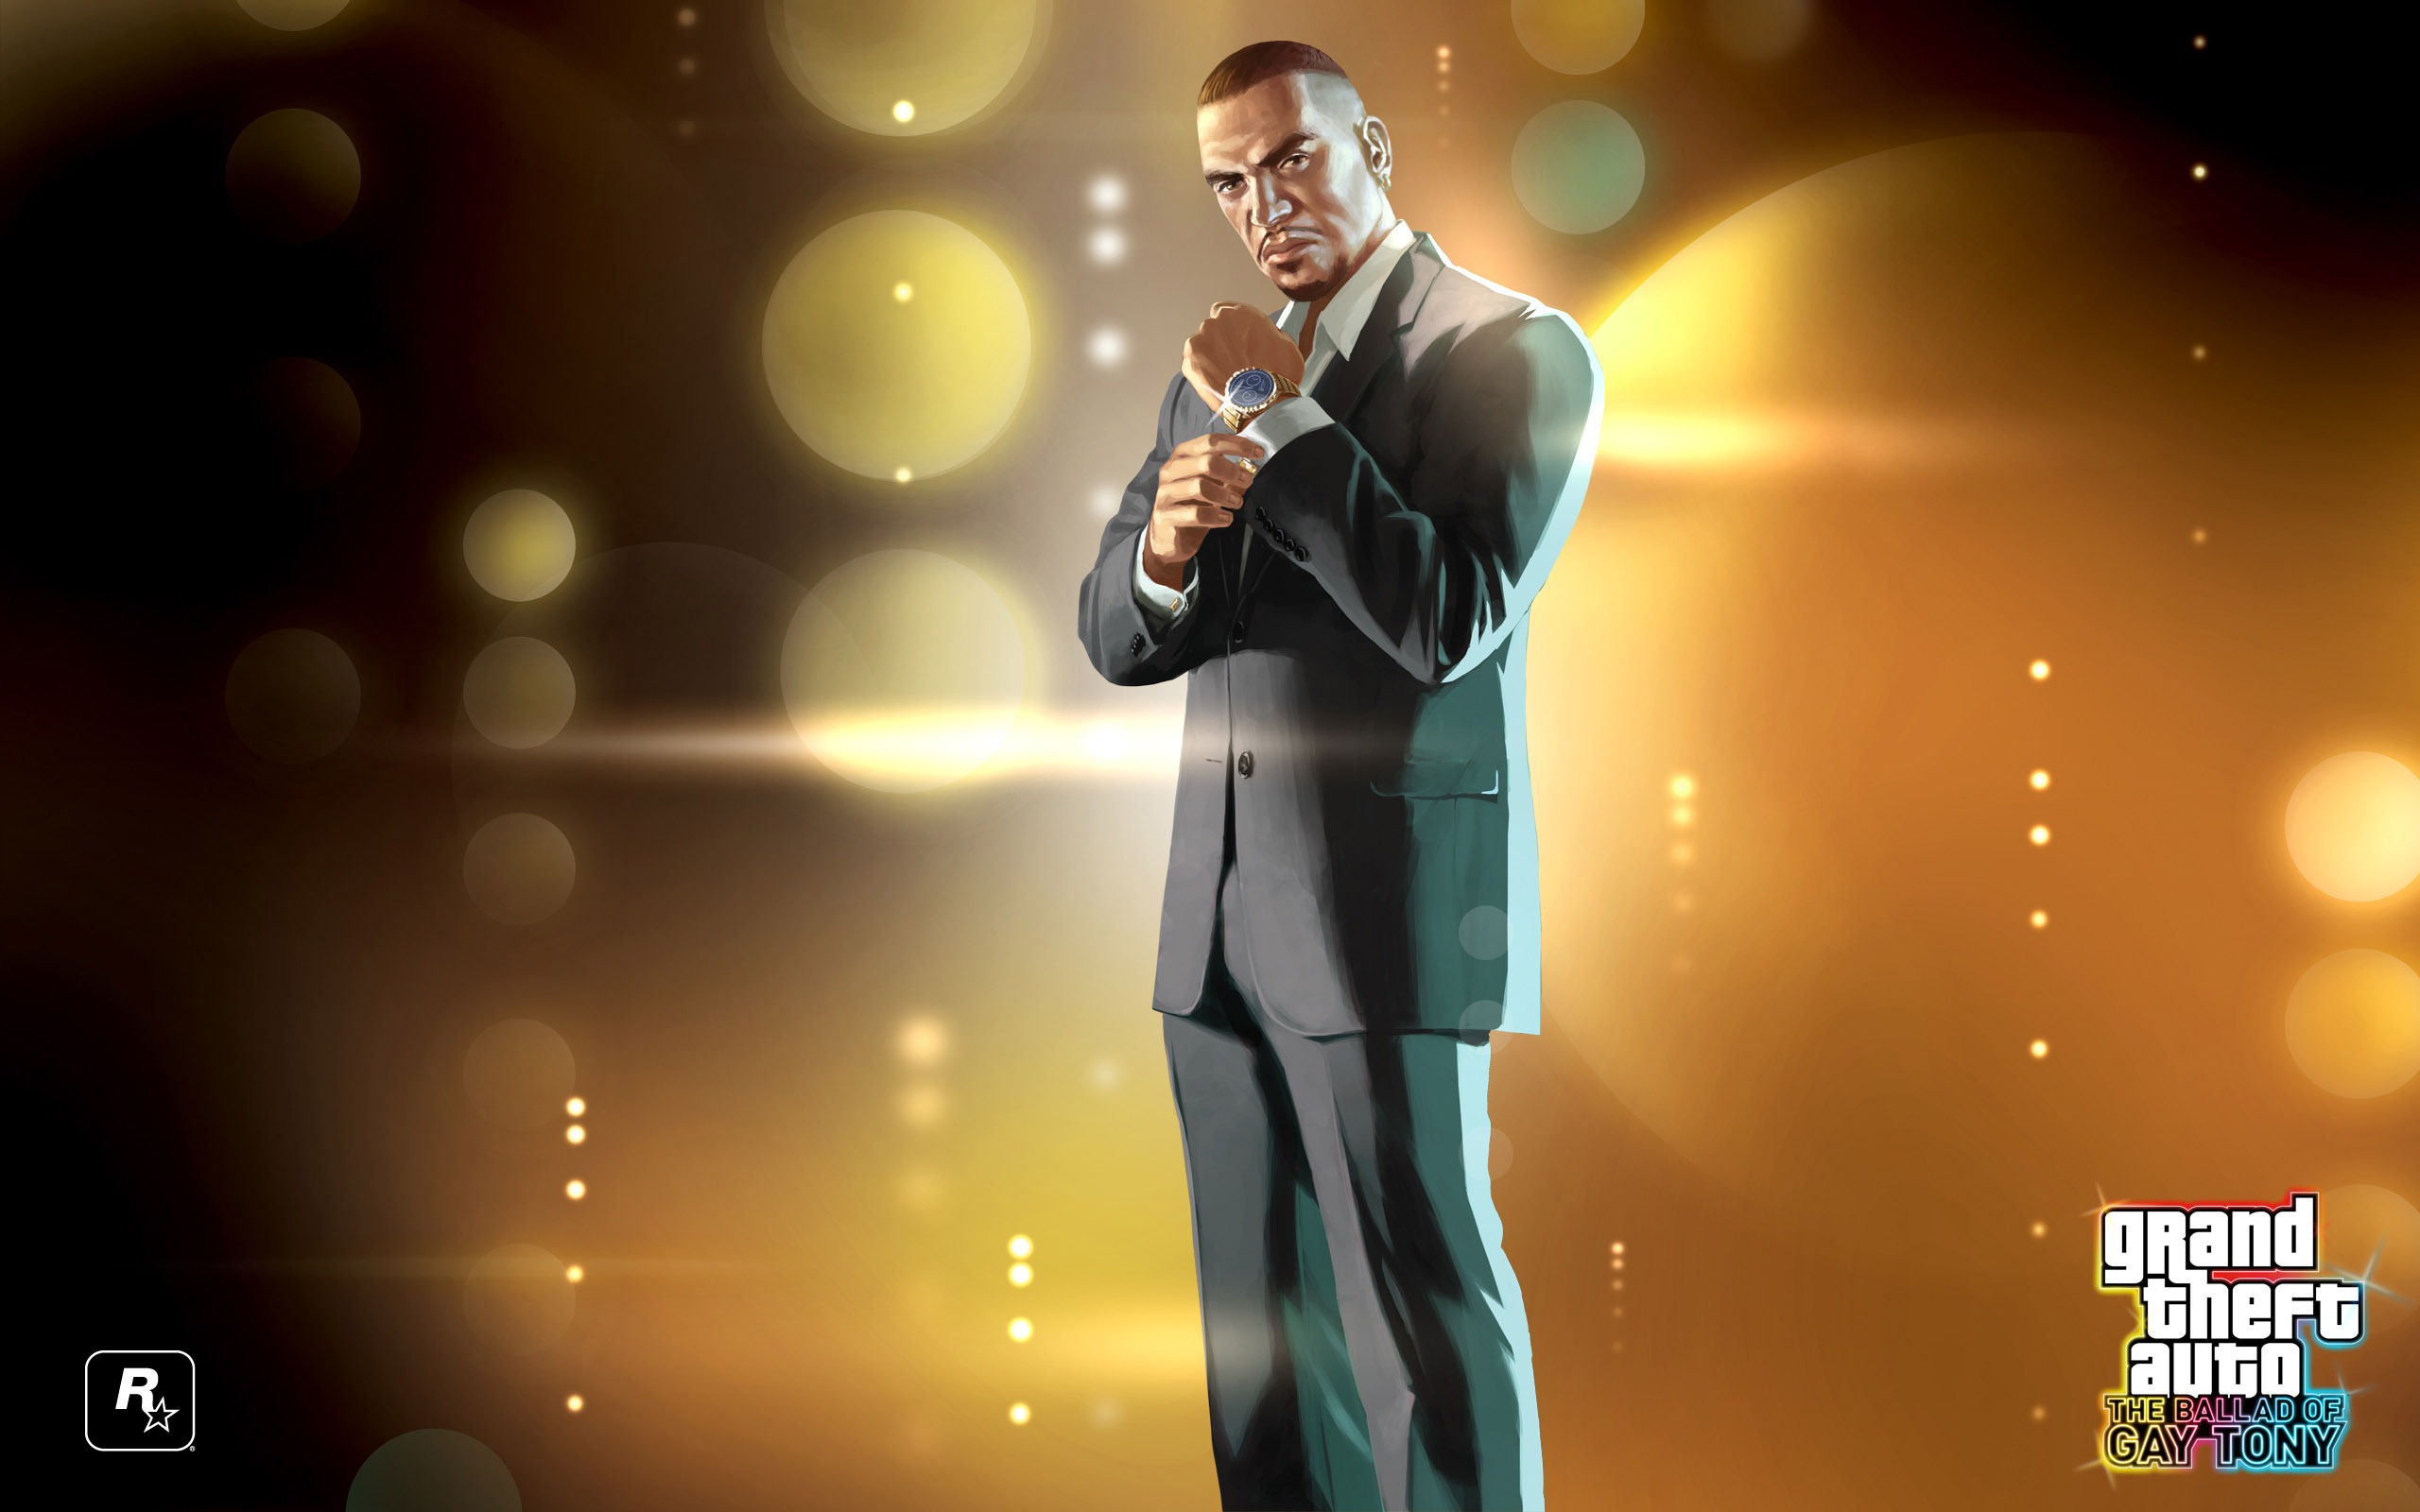 Grand Theft Auto: Vice City fondos de escritorio de alta definición #23 - 2560x1600